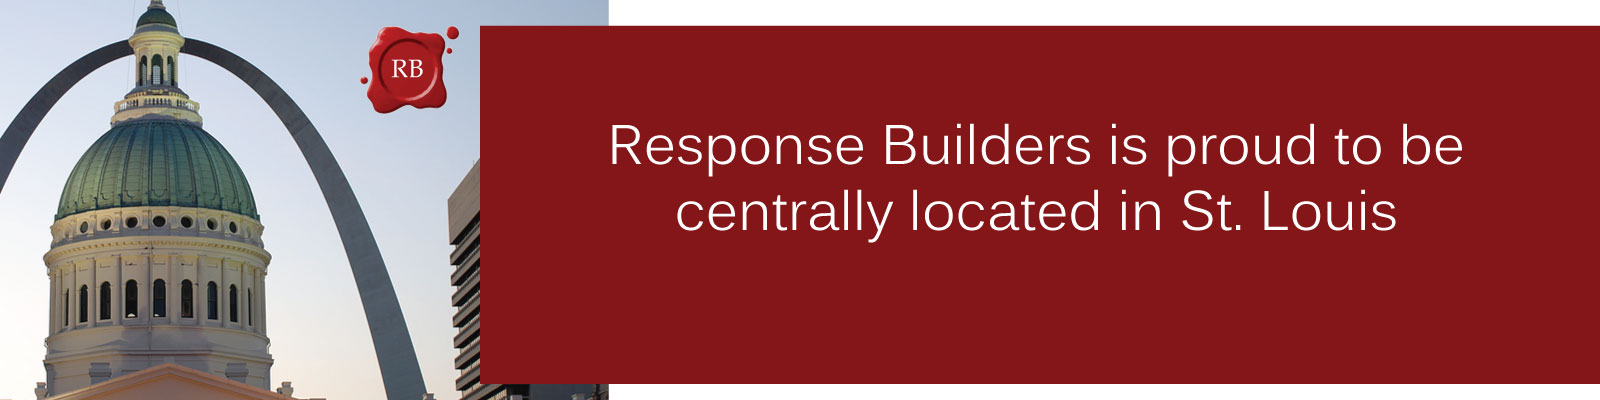 Response Builders Web Site Design & Search Engine Optimization (SEO) St. Louis 